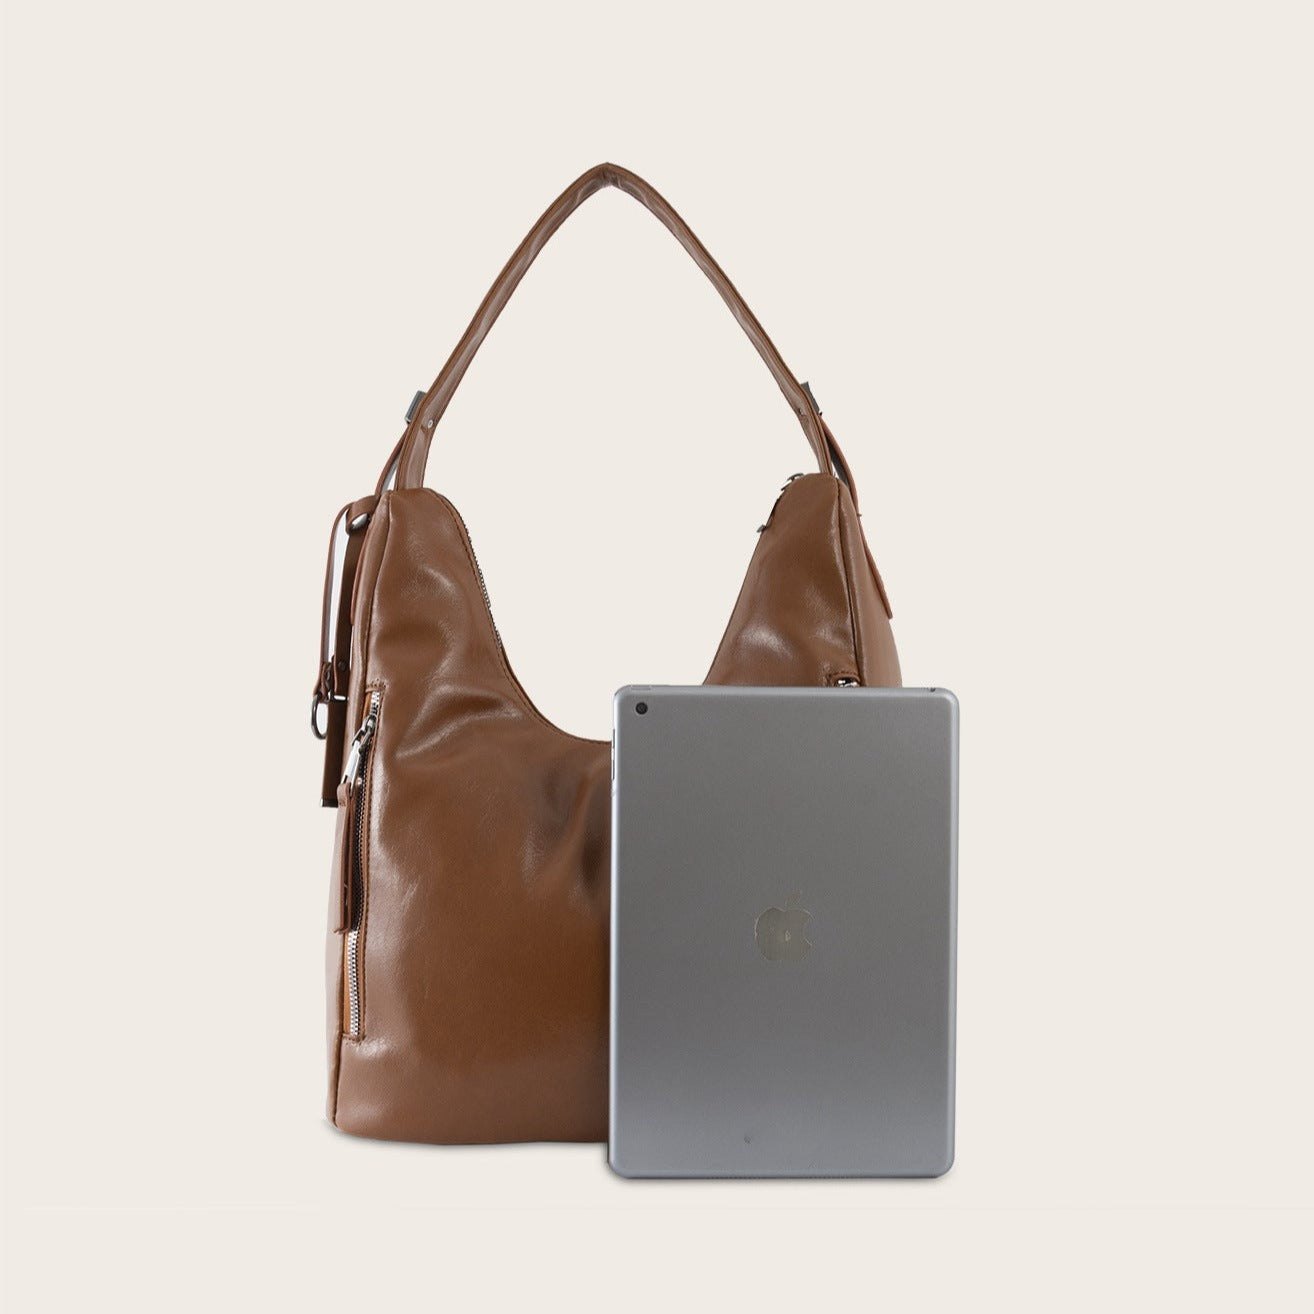 Soft leather simple one-shoulder portable handbags